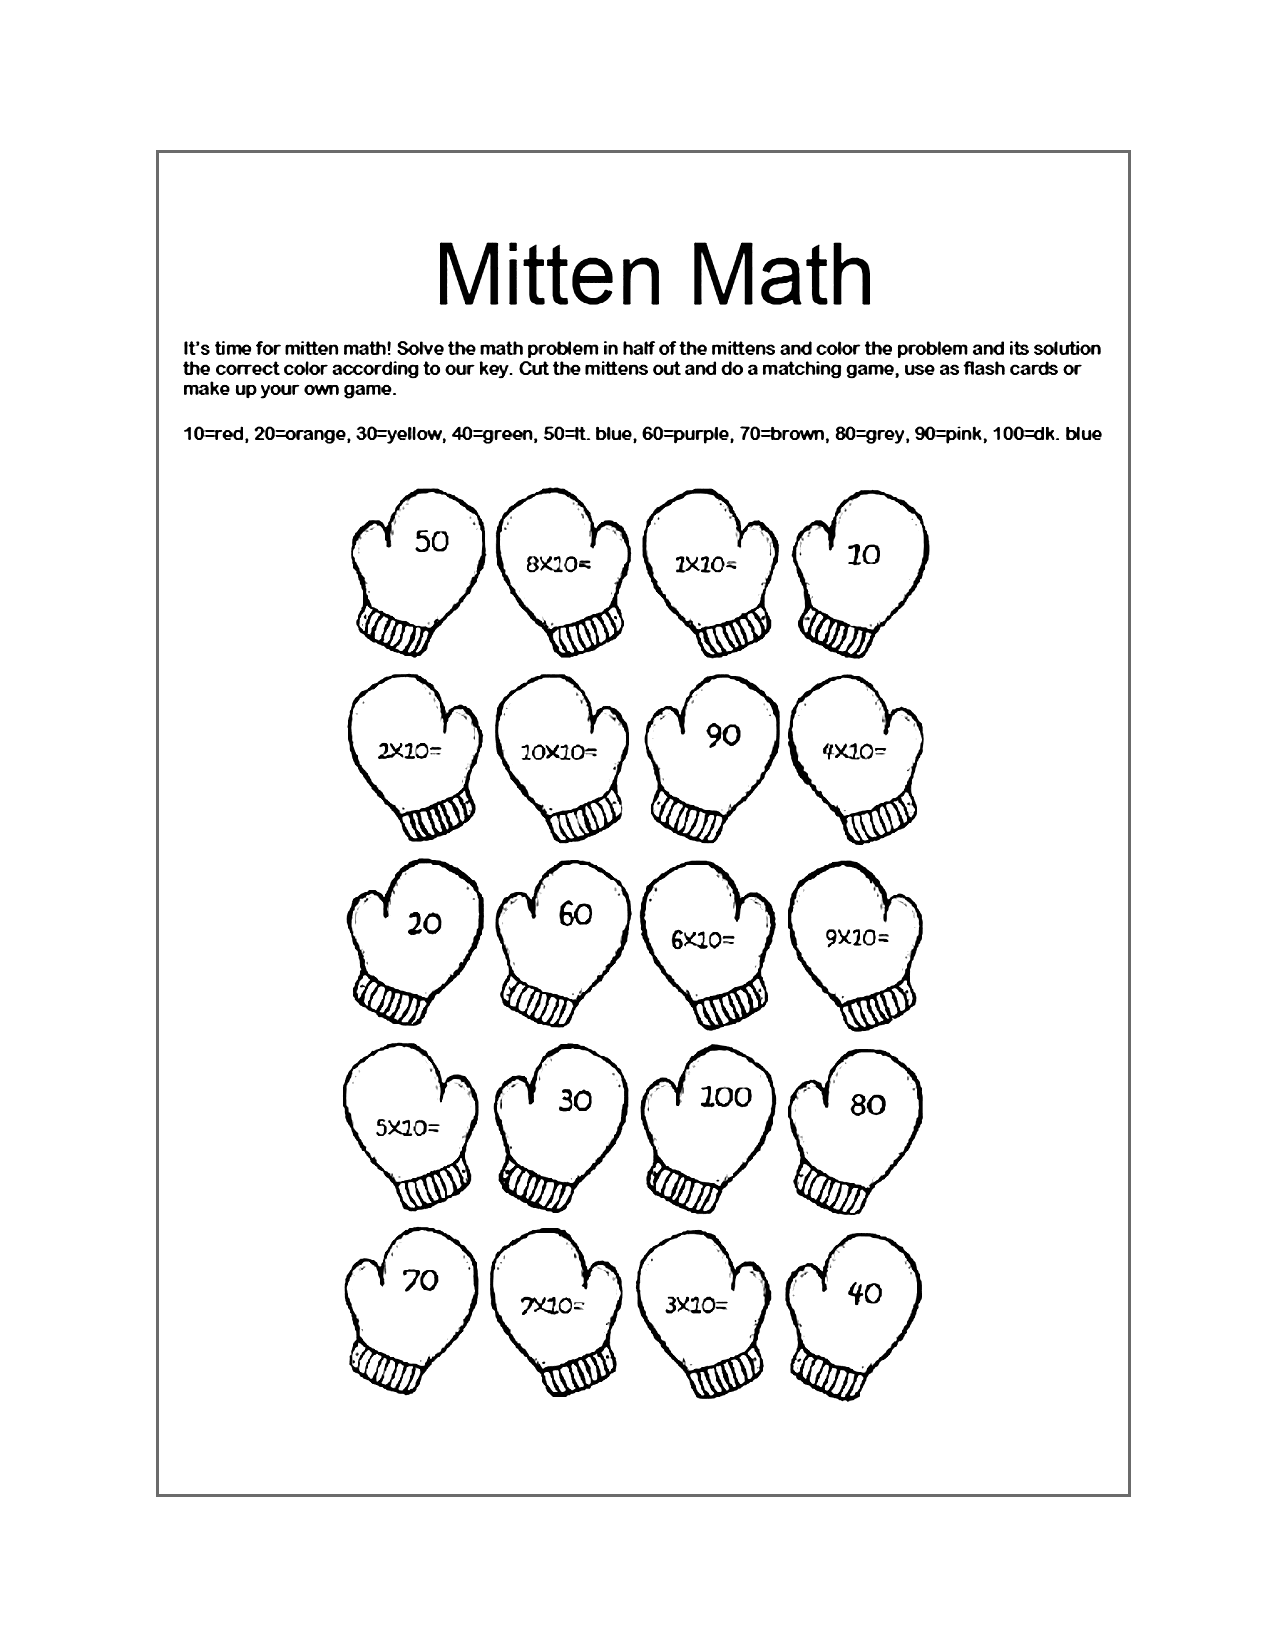 Mitten Math Multiplication Printout